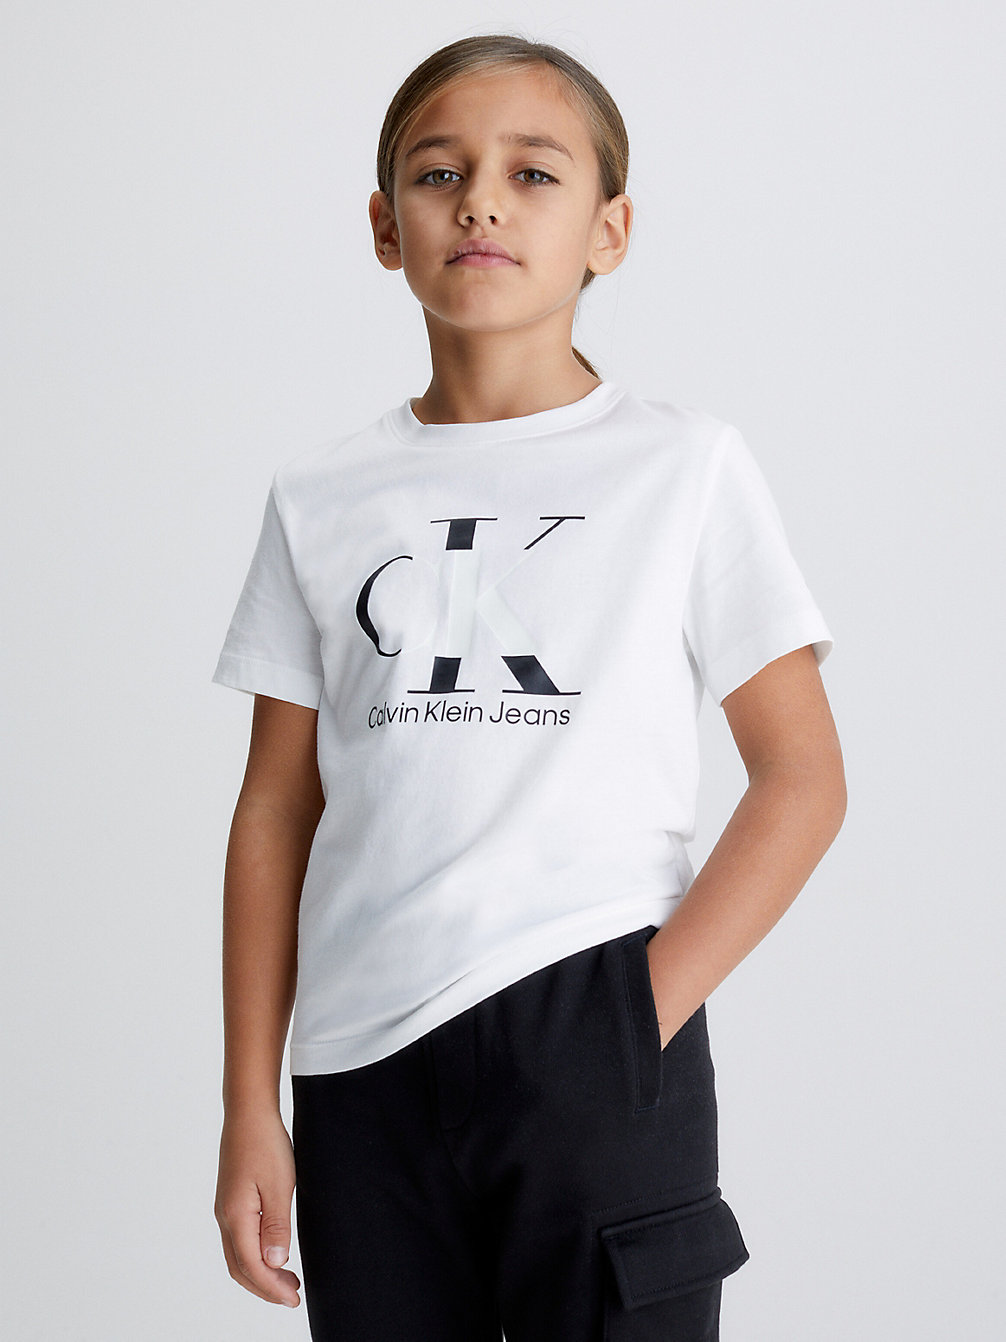 BRIGHT WHITE Colour Reveal Logo T-Shirt undefined boys Calvin Klein